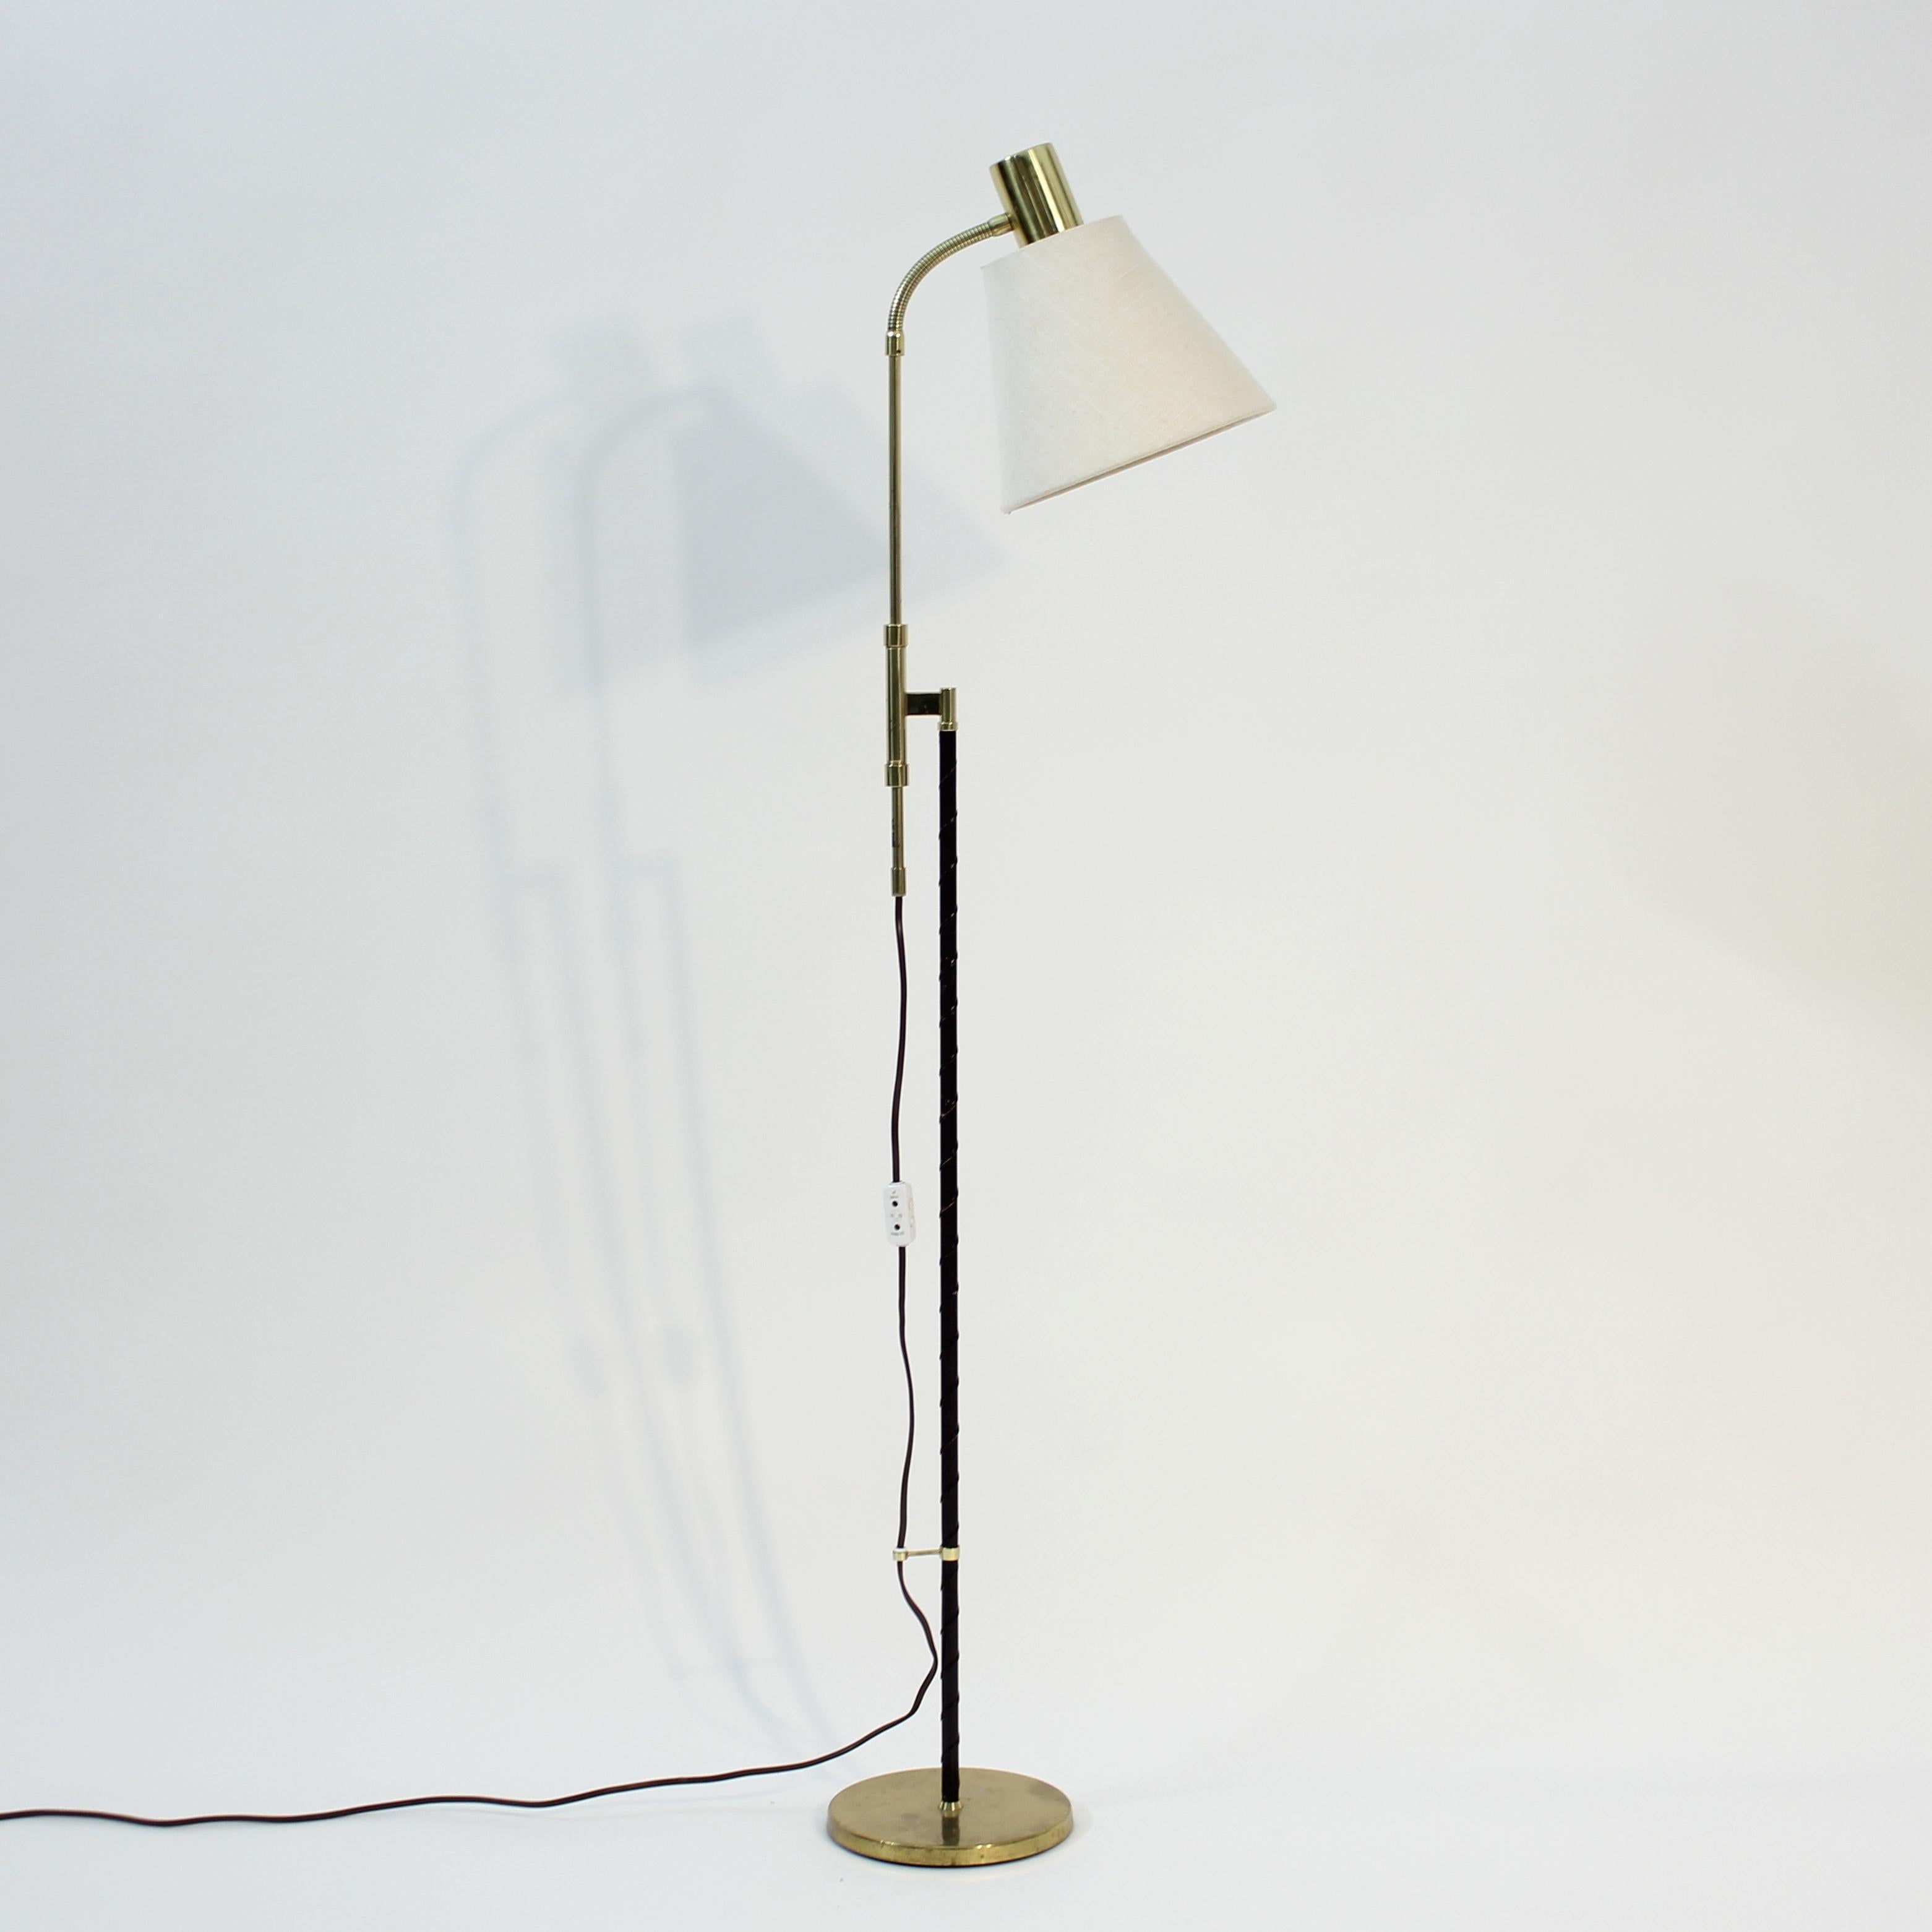 Scandinavian Modern Swedish height adjustable floor lamp by MAE (Möller Armatur Eskilstuna), 1960s For Sale